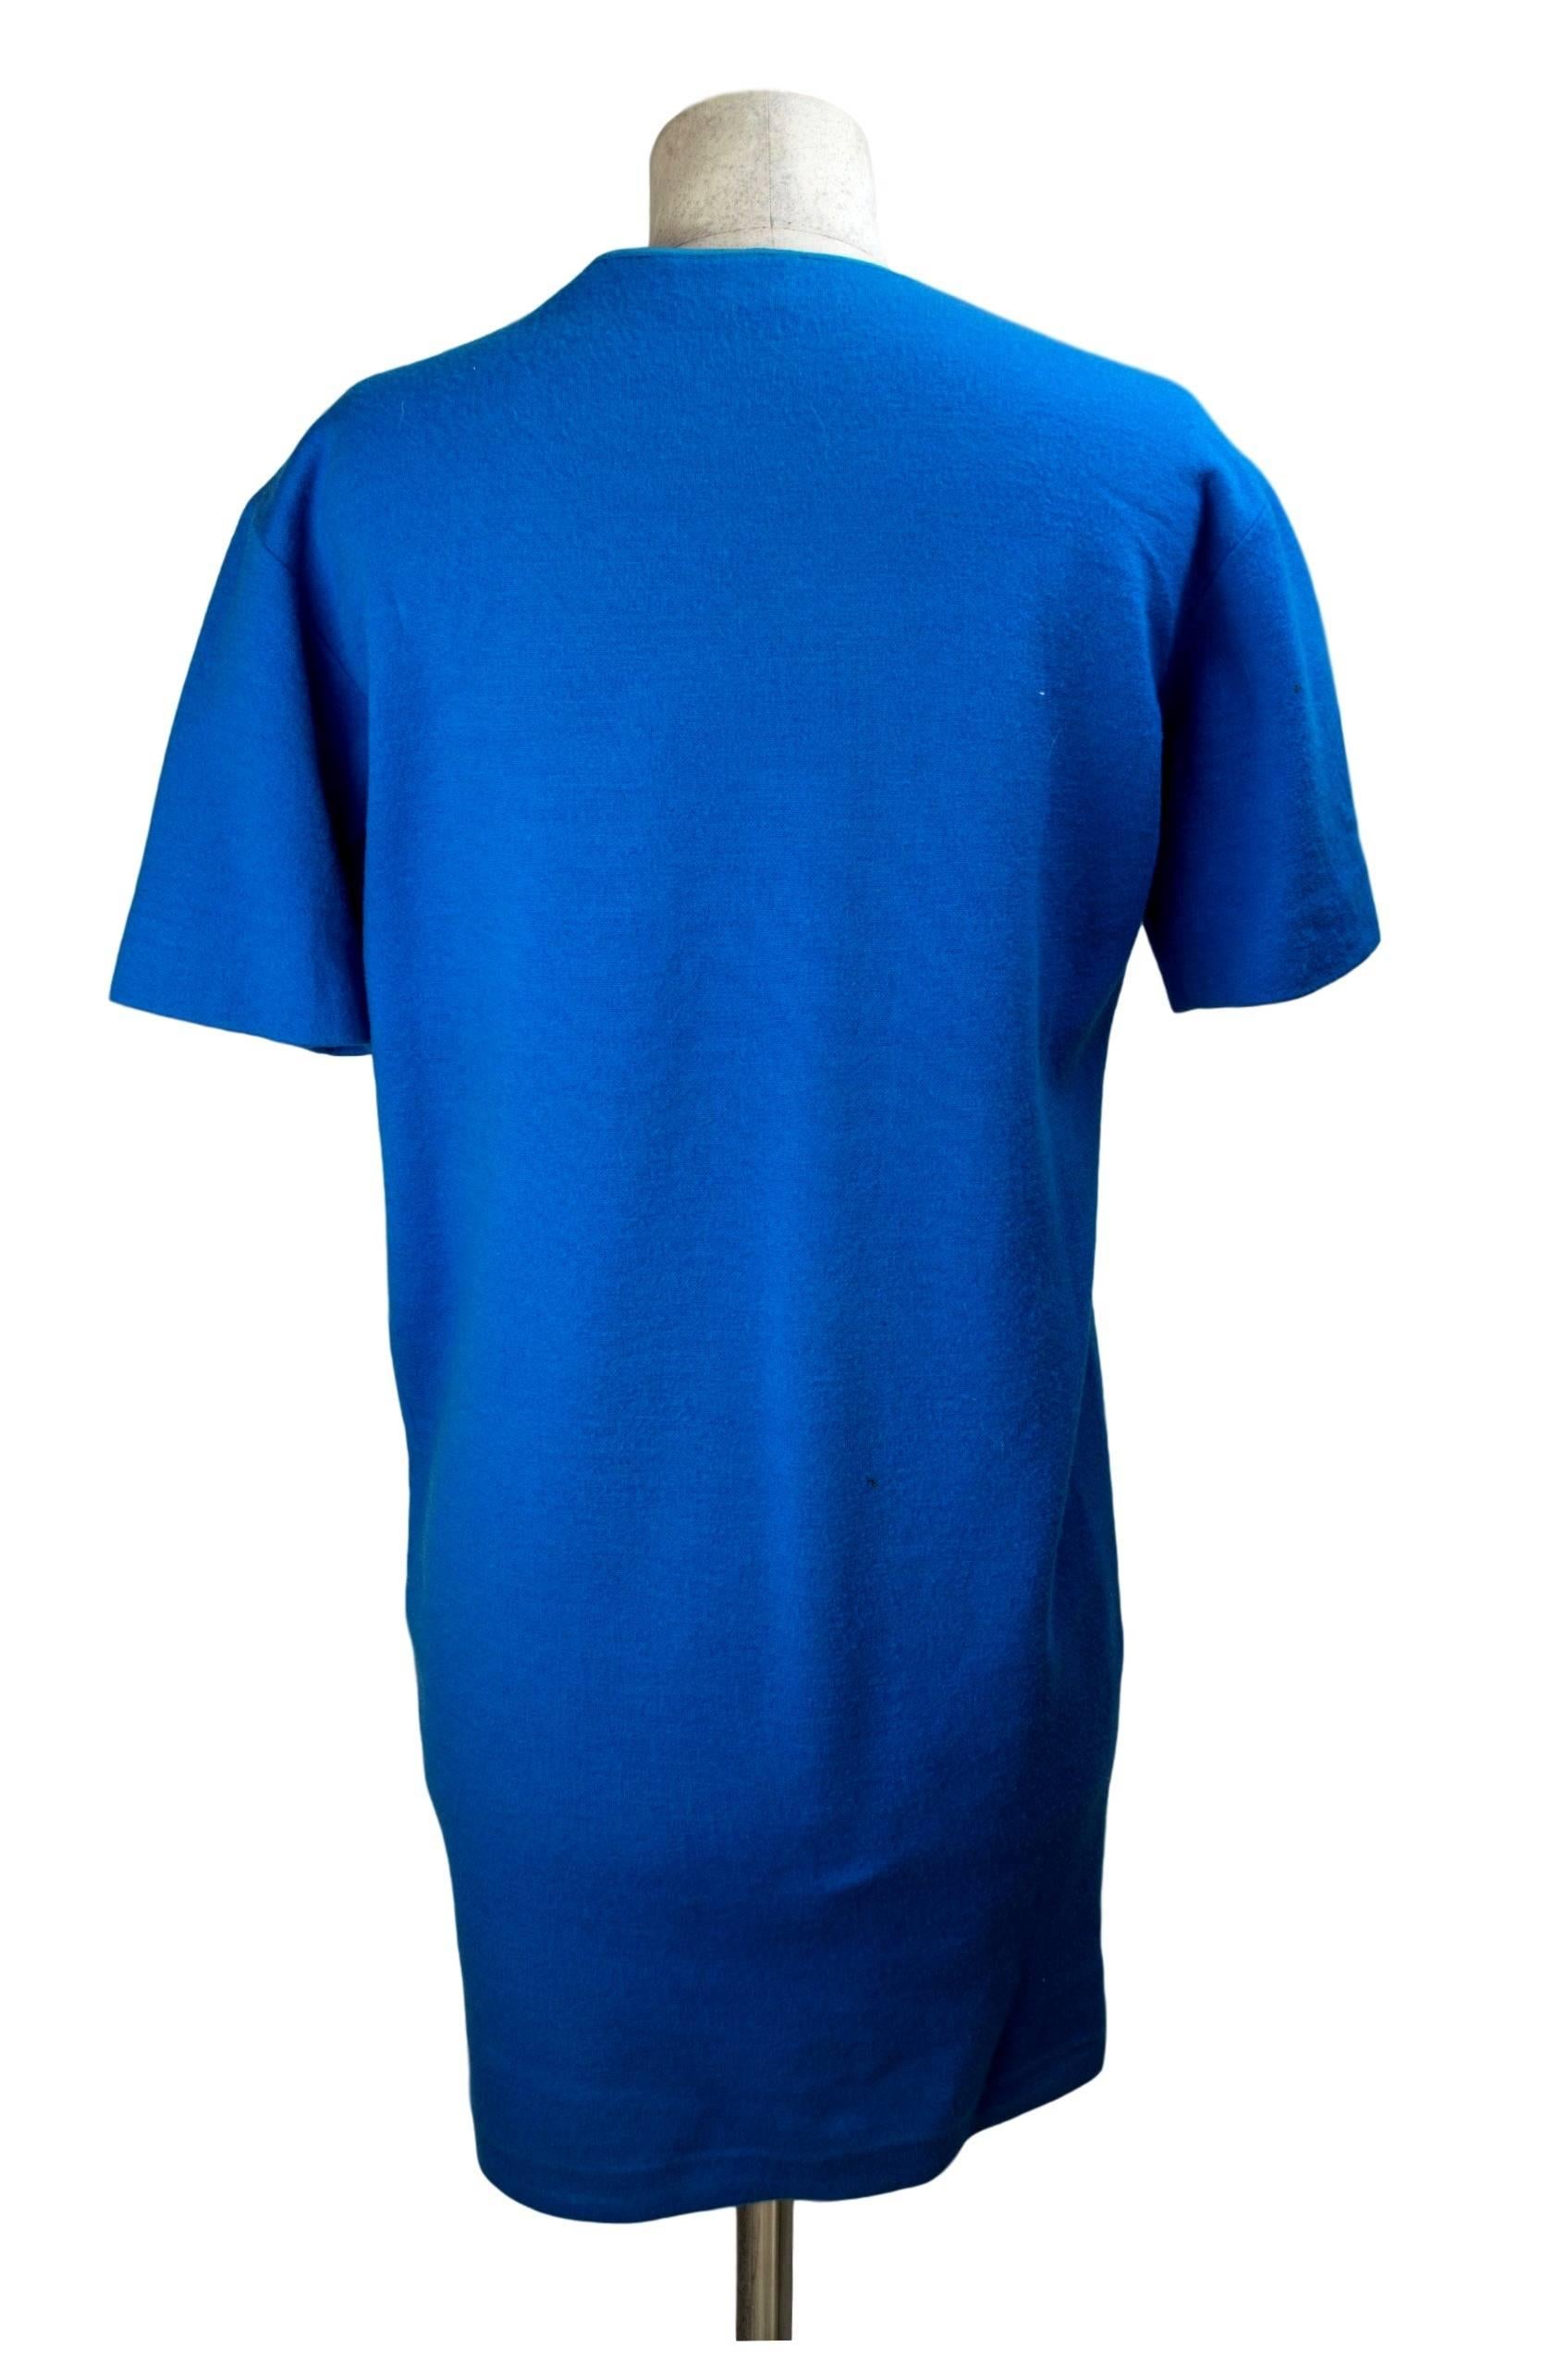 Blue Gianfranco Ferrè 1970s blue tunic dress women's size 44 100% wool